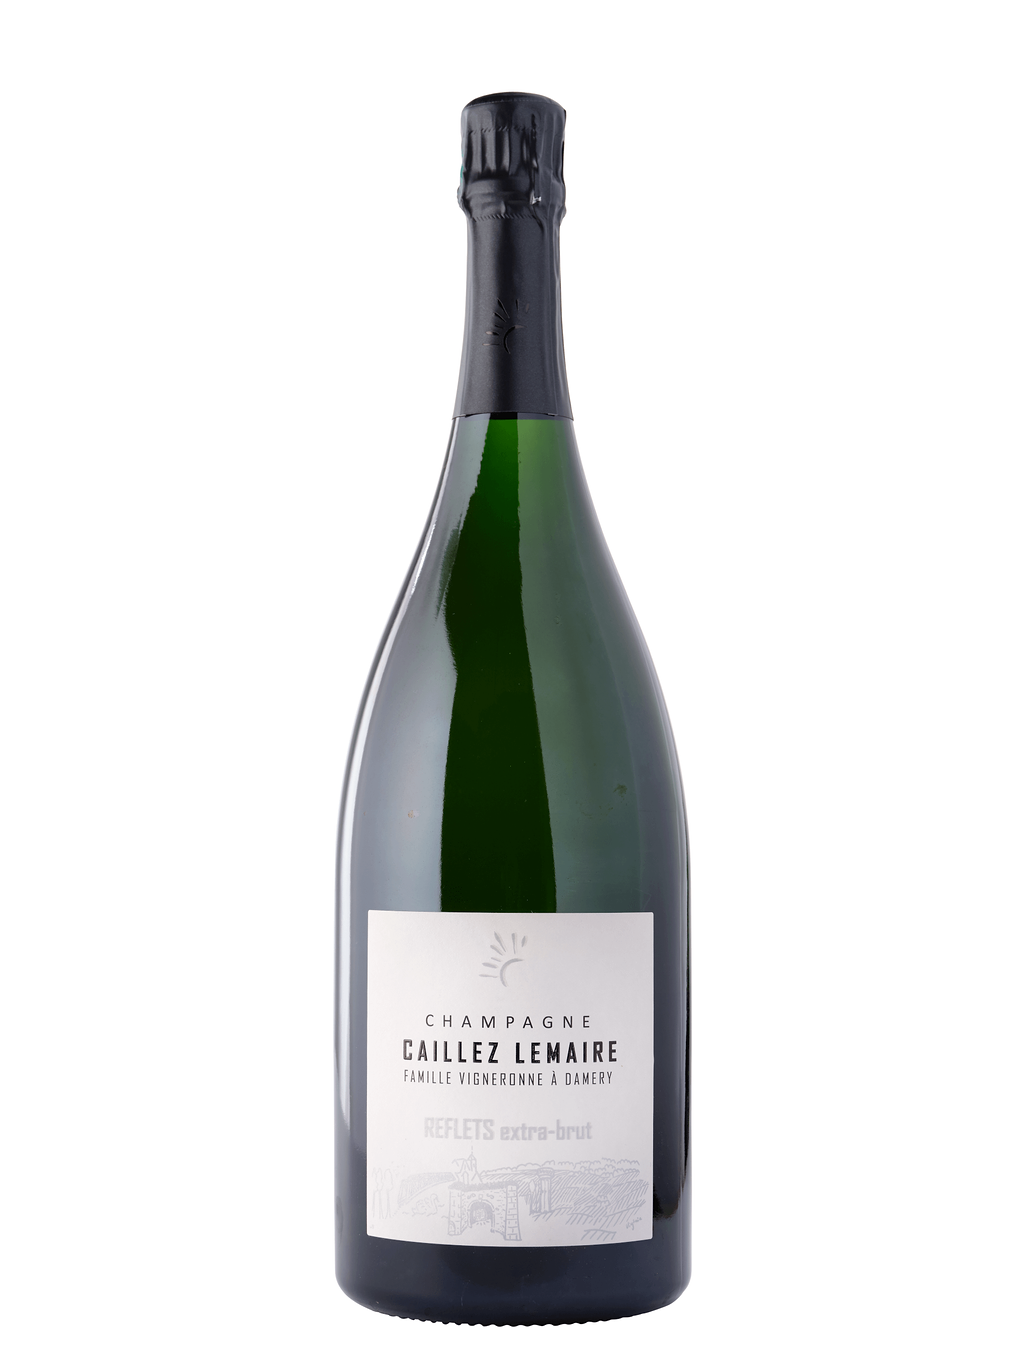 Champagne Caillez-Lemaire Reflets